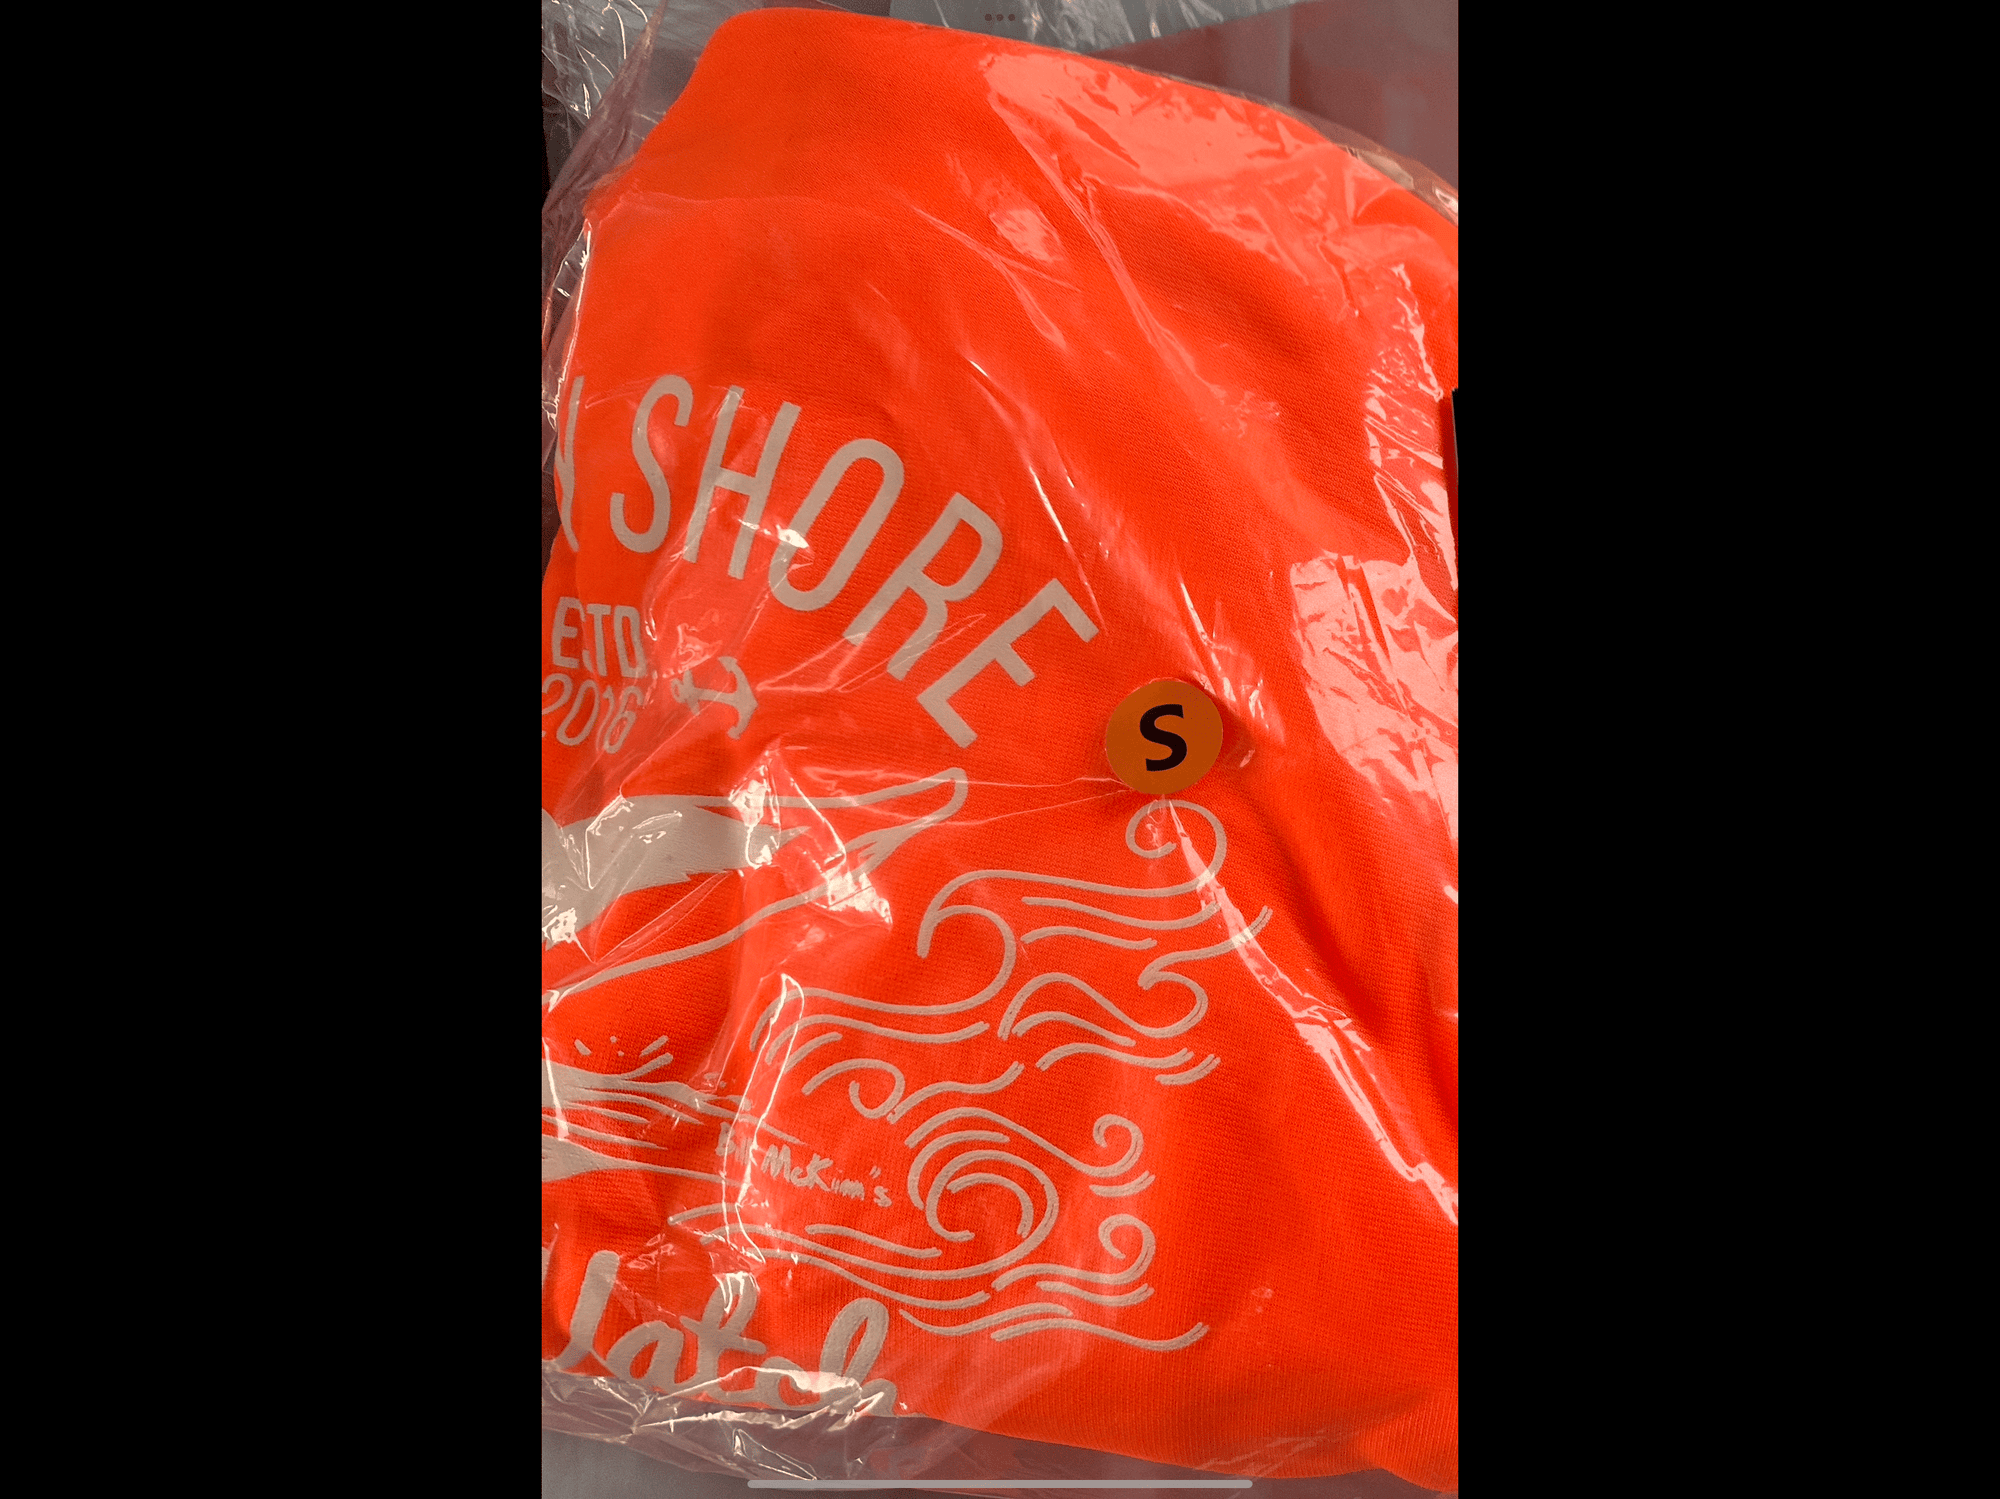 Flash Sale Classic Jersey Shore Whale Watch Sweatshirt printed both sides Bill McKim Photography Small Orange 